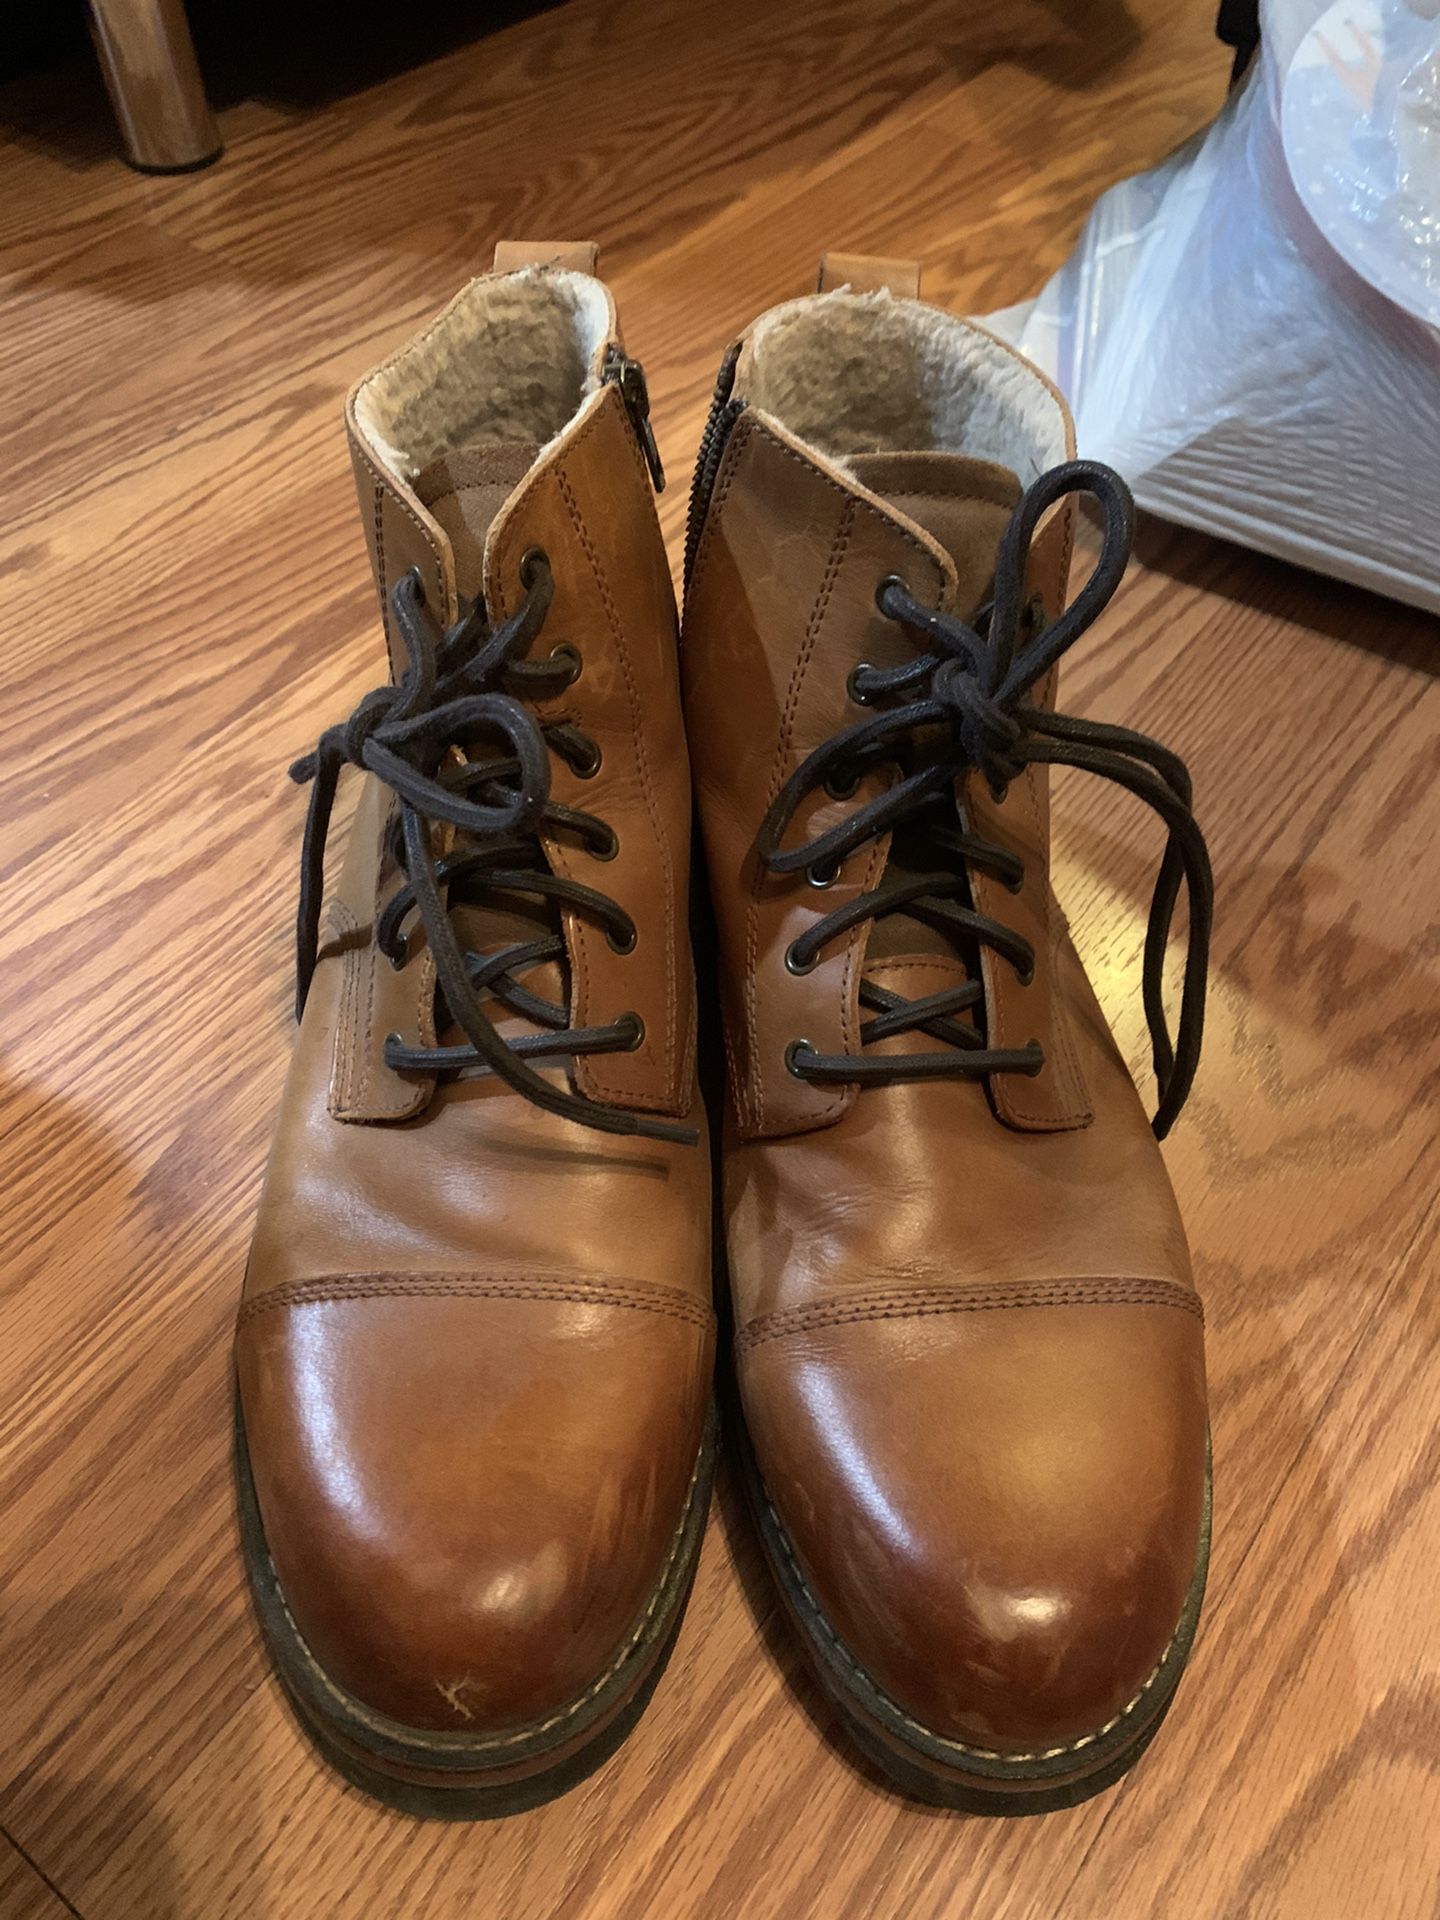 Aldo boots 